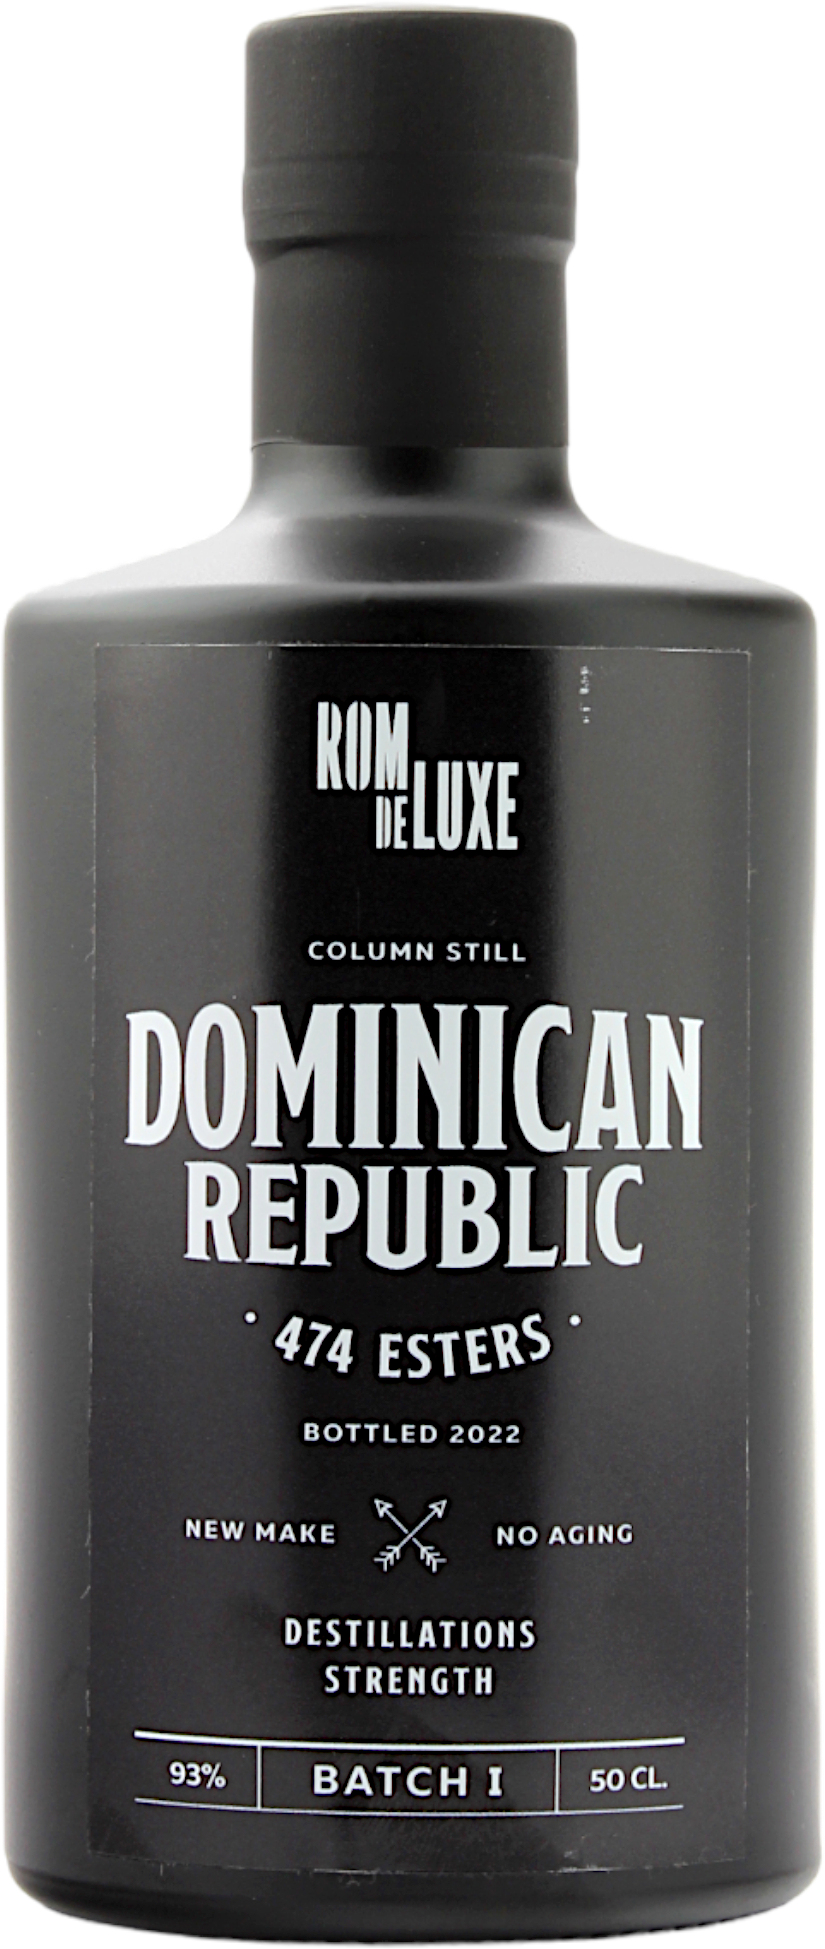 Dominican Republic New Make Batch I RomDeLuxe 93.0% 0,5l